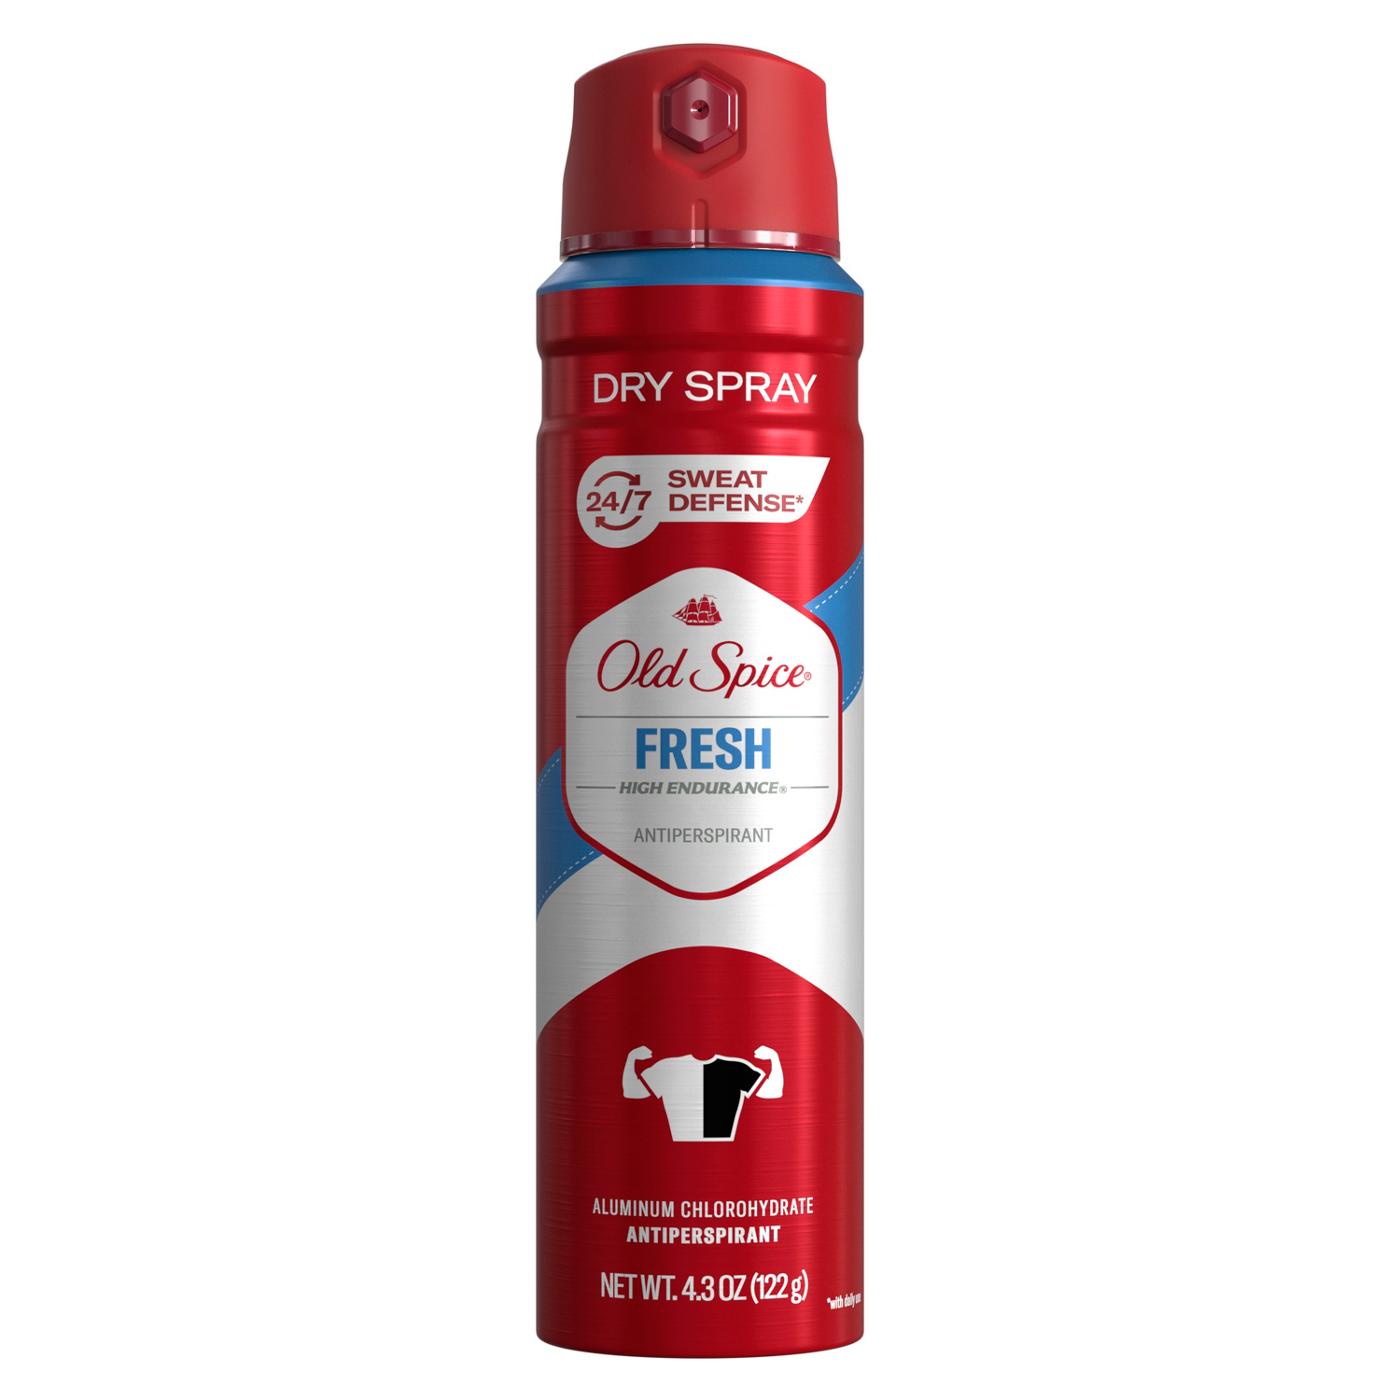 Old Spice  Fresh Dry Spray Deodorant; image 1 of 2